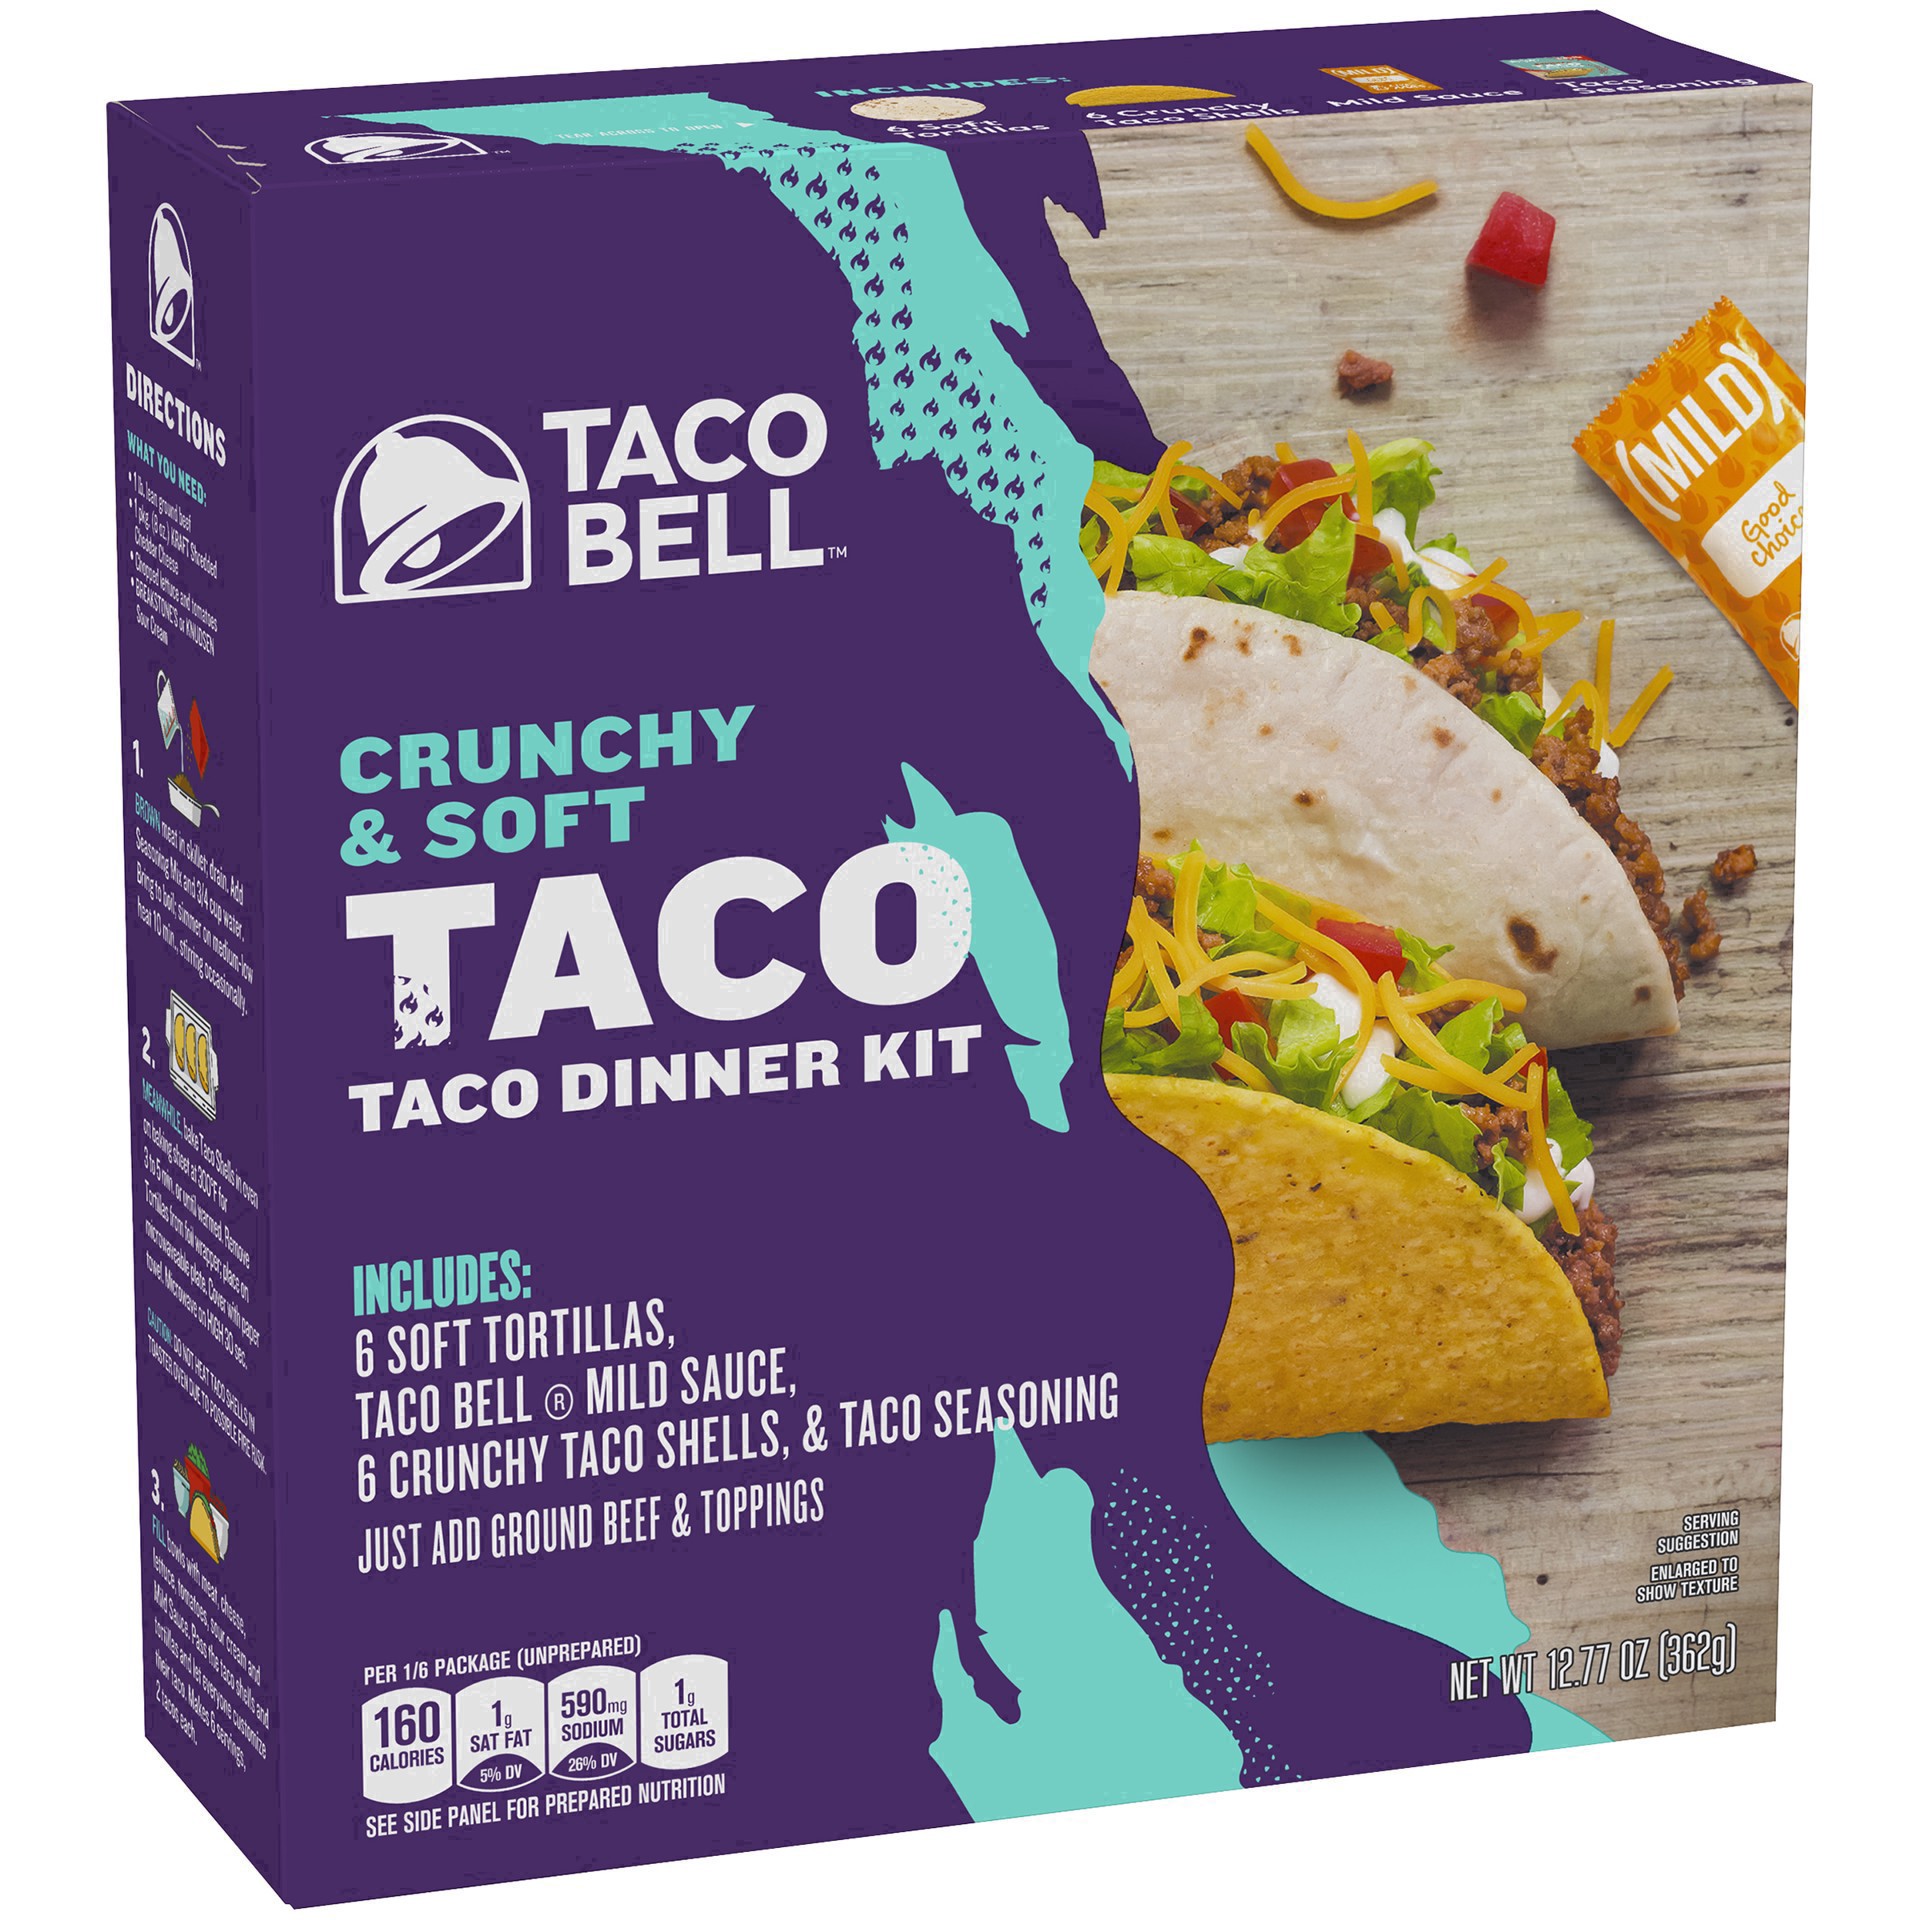 slide 67 of 101, Taco Bell Crunchy & Soft Taco Cravings Kit with 6 Soft Tortillas, 6 Crunchy Taco Shells, Taco Bell Mild Sauce & Seasoning, 12.77 oz Box, 1 ea